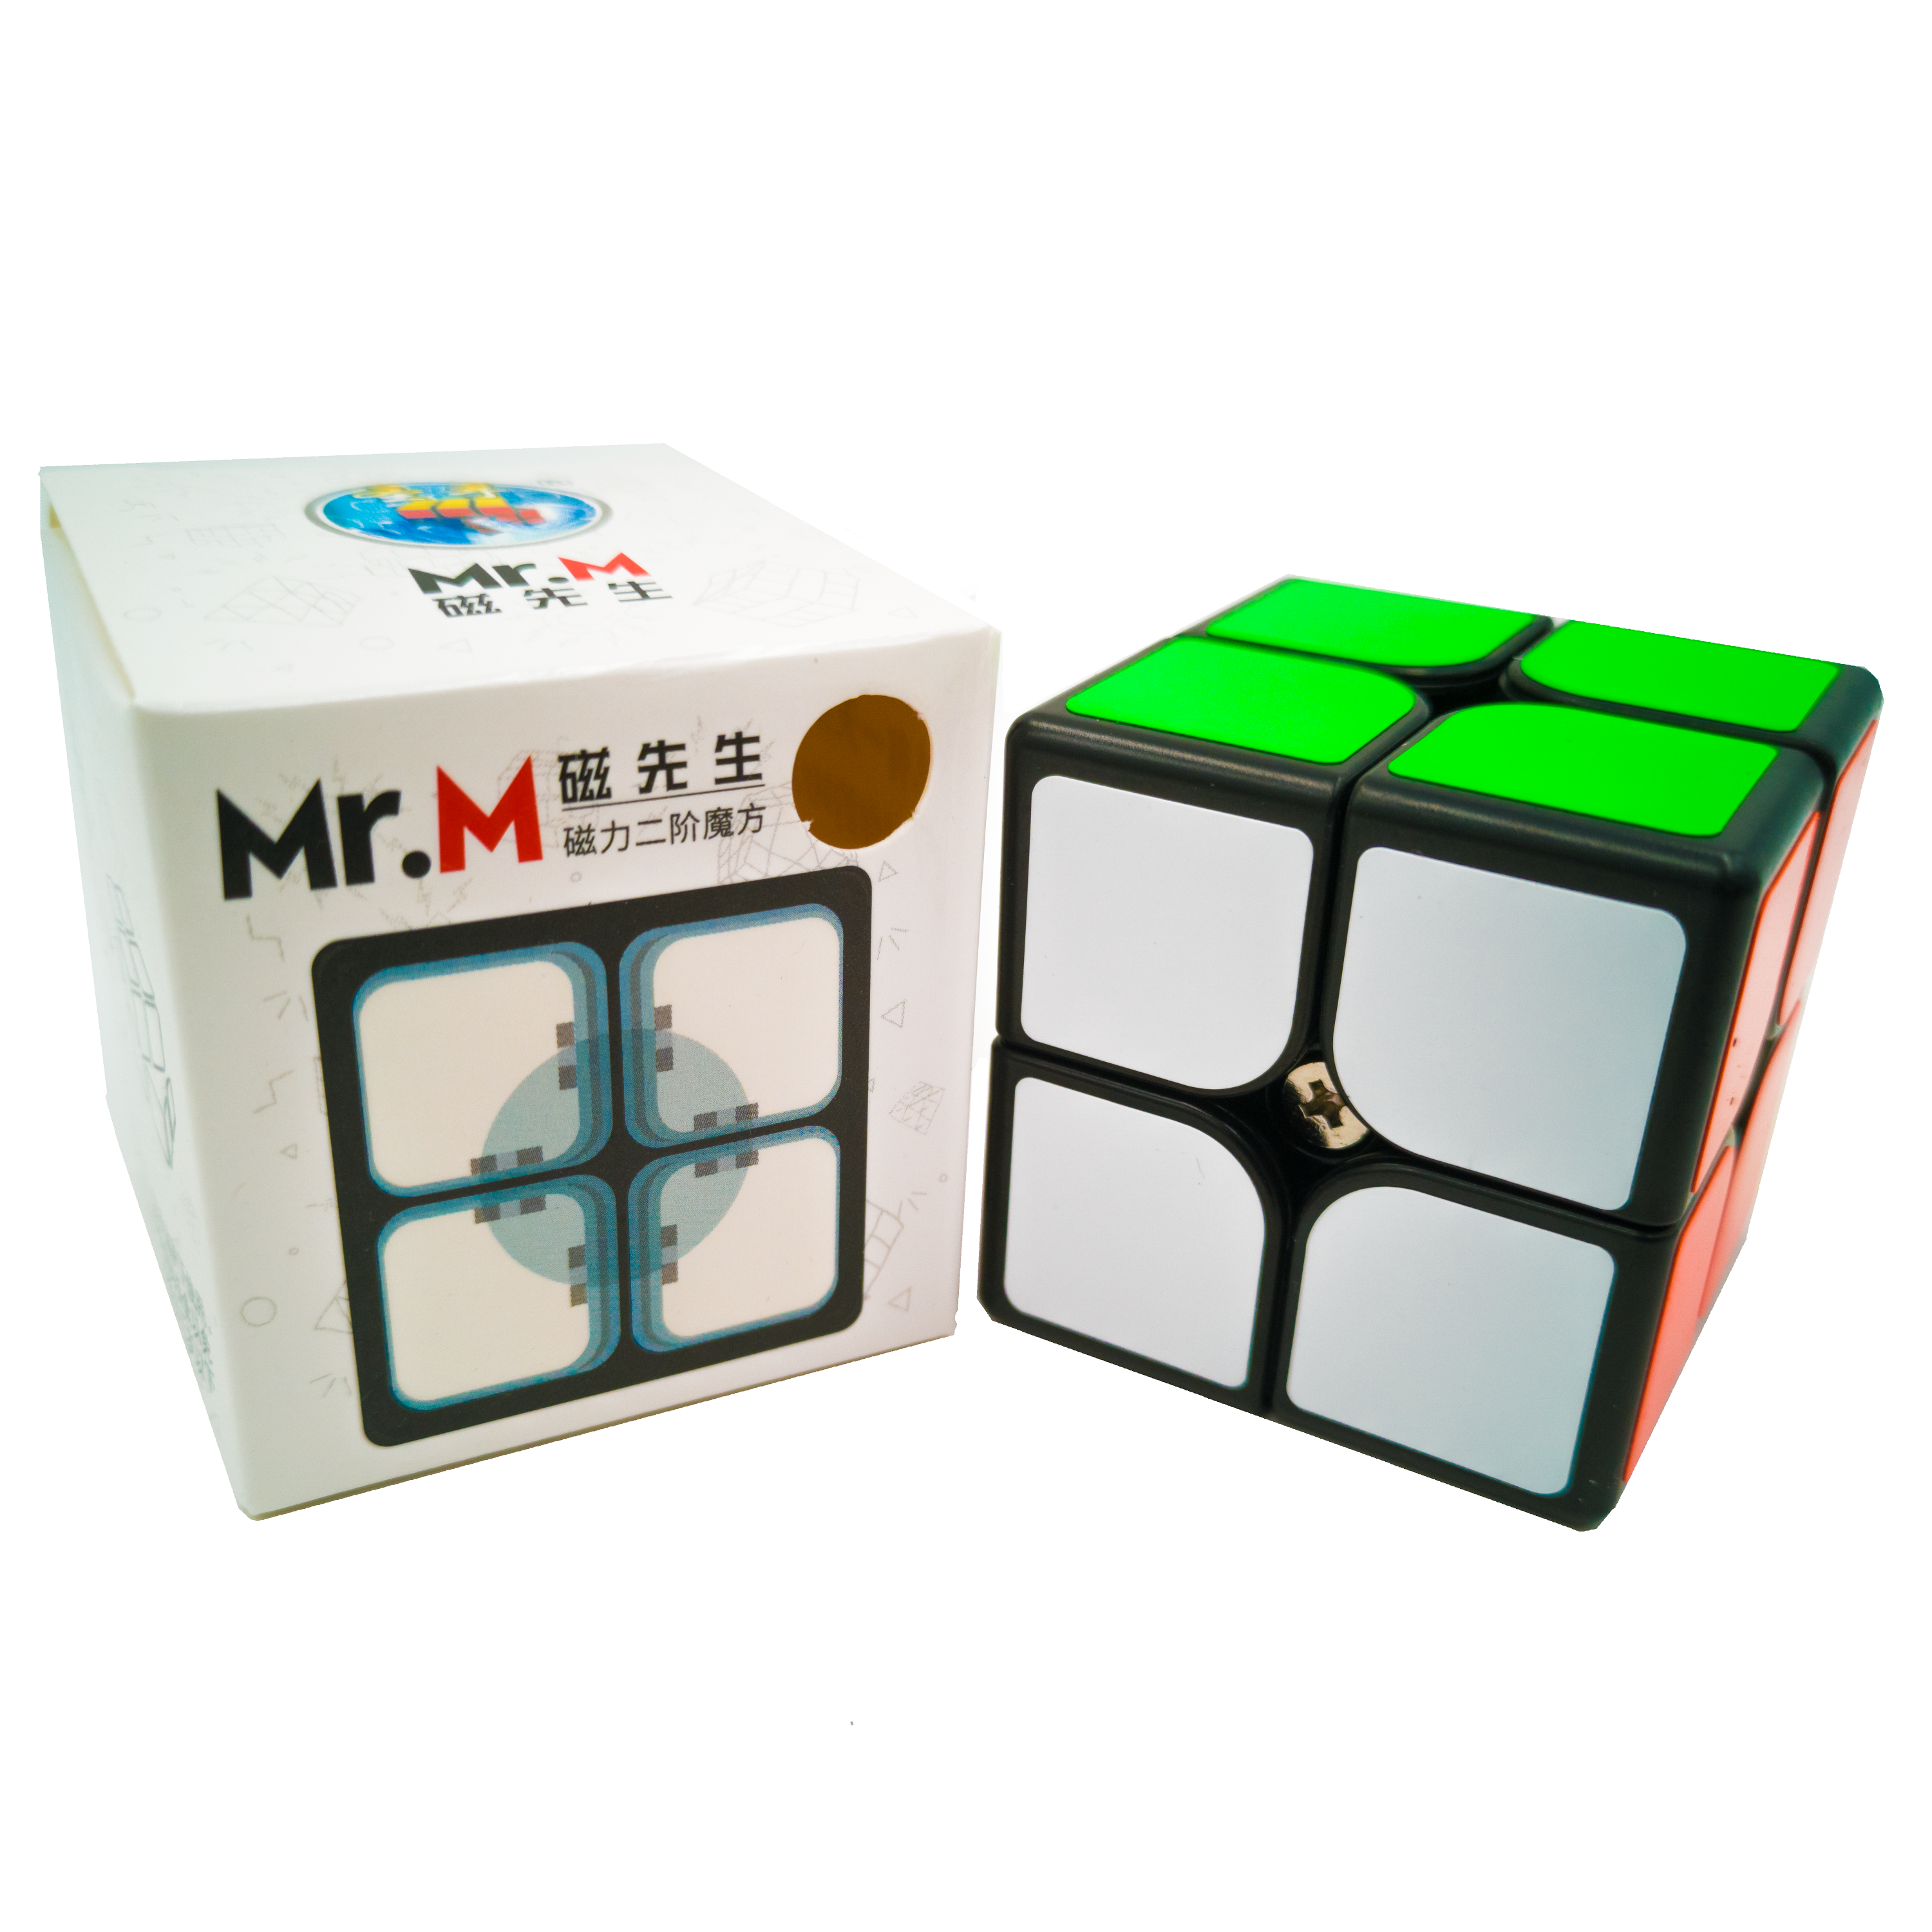 ShengShou Mr M 2x2 - CuberSpace